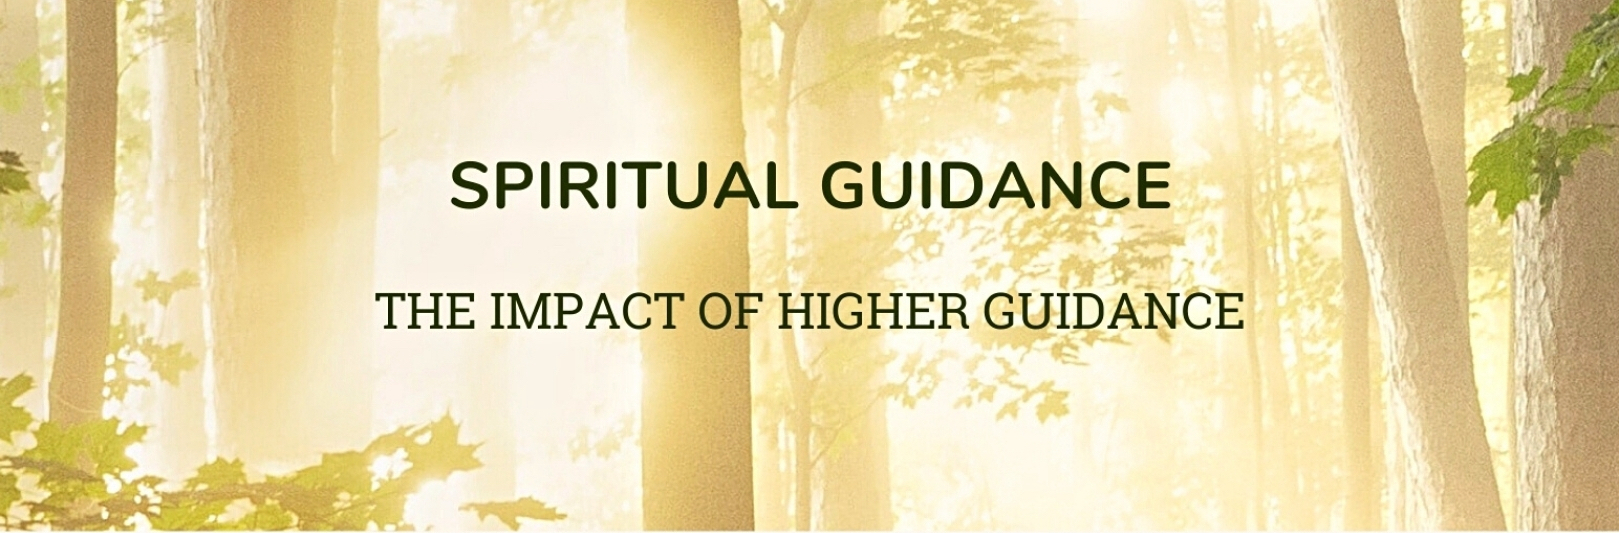 Tree of Light - 4. Spiritual Guidance - The impact of Higher Guidance